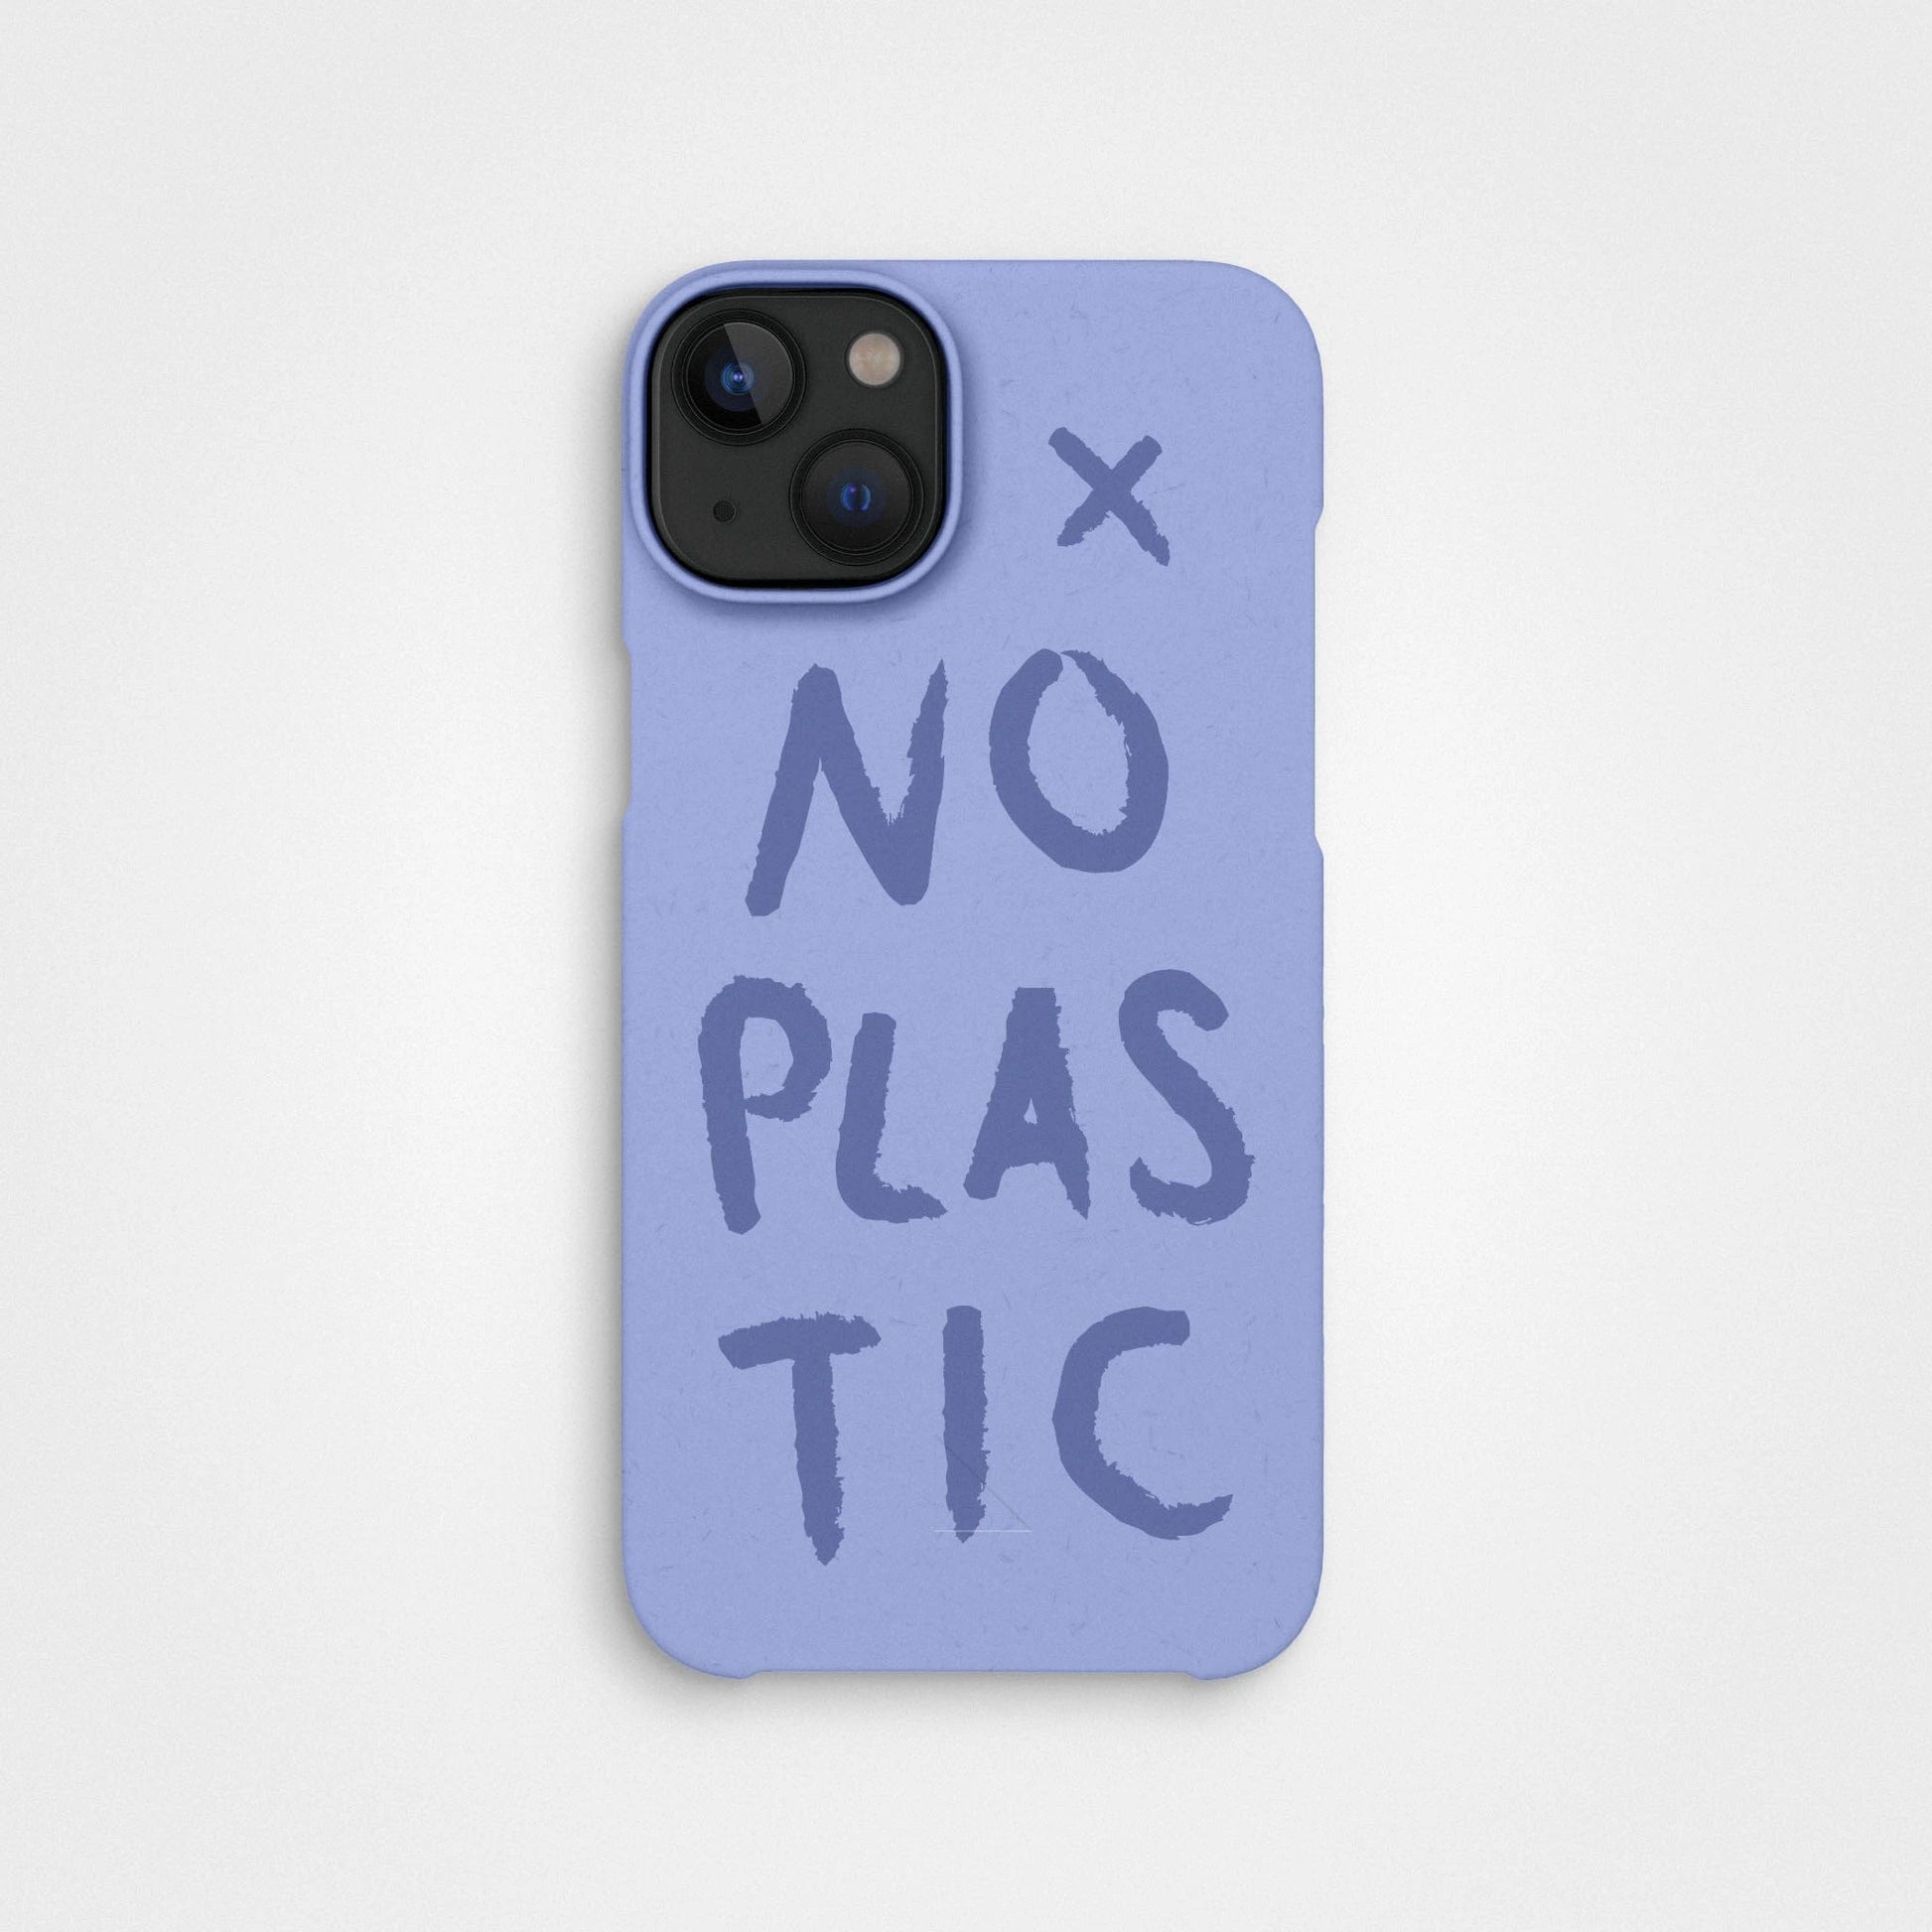 Biodegradable Phone Case